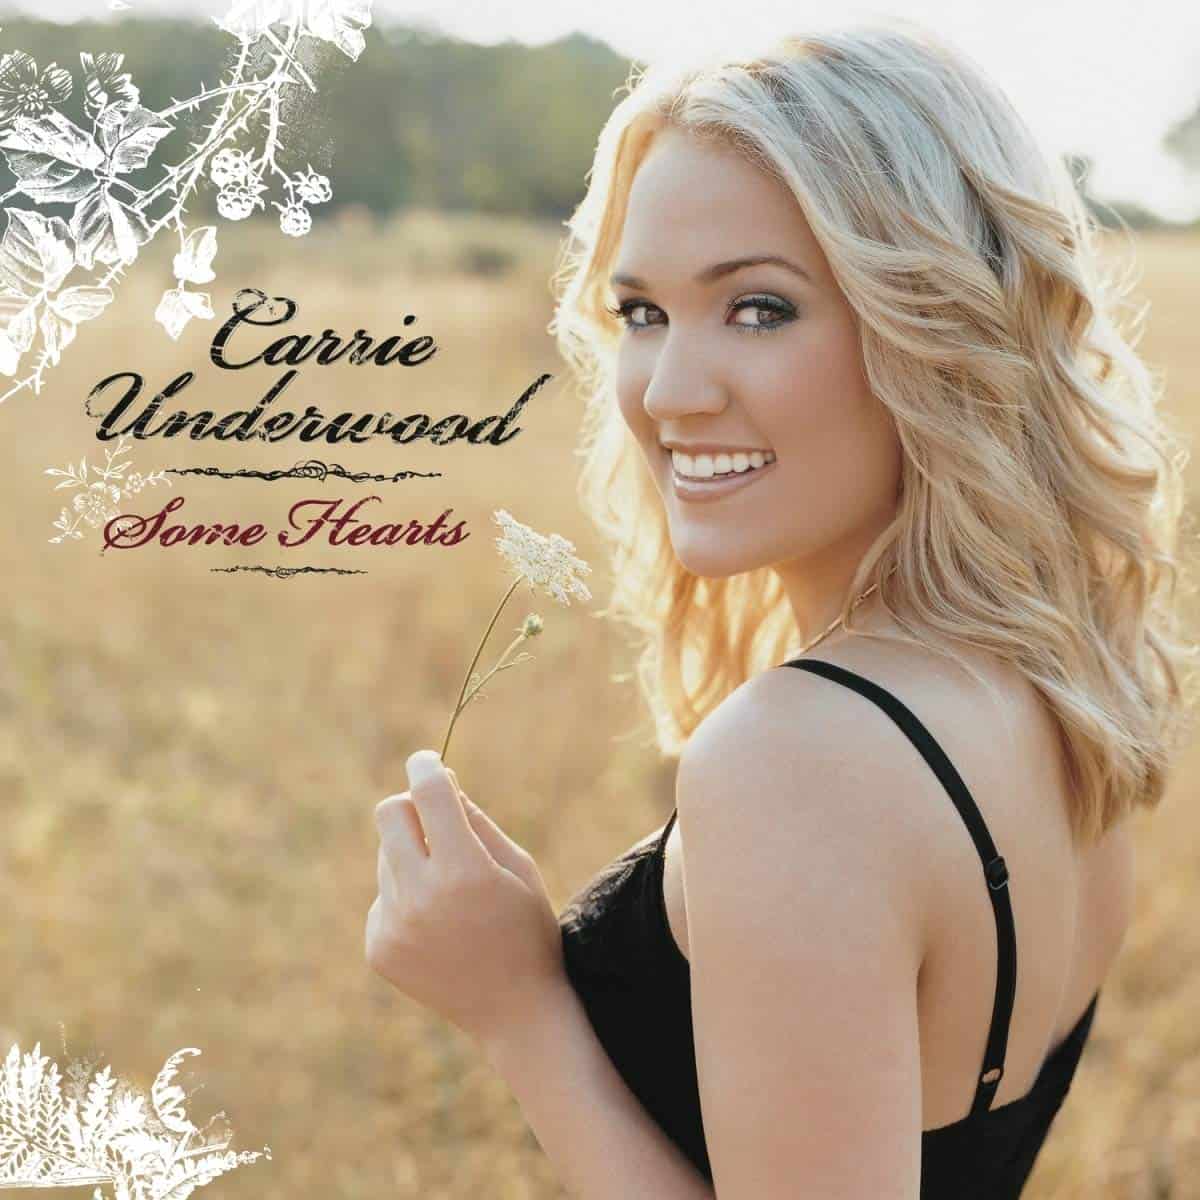 Carrie-Underwood-Some-Hearts-vinyl-record-album-front